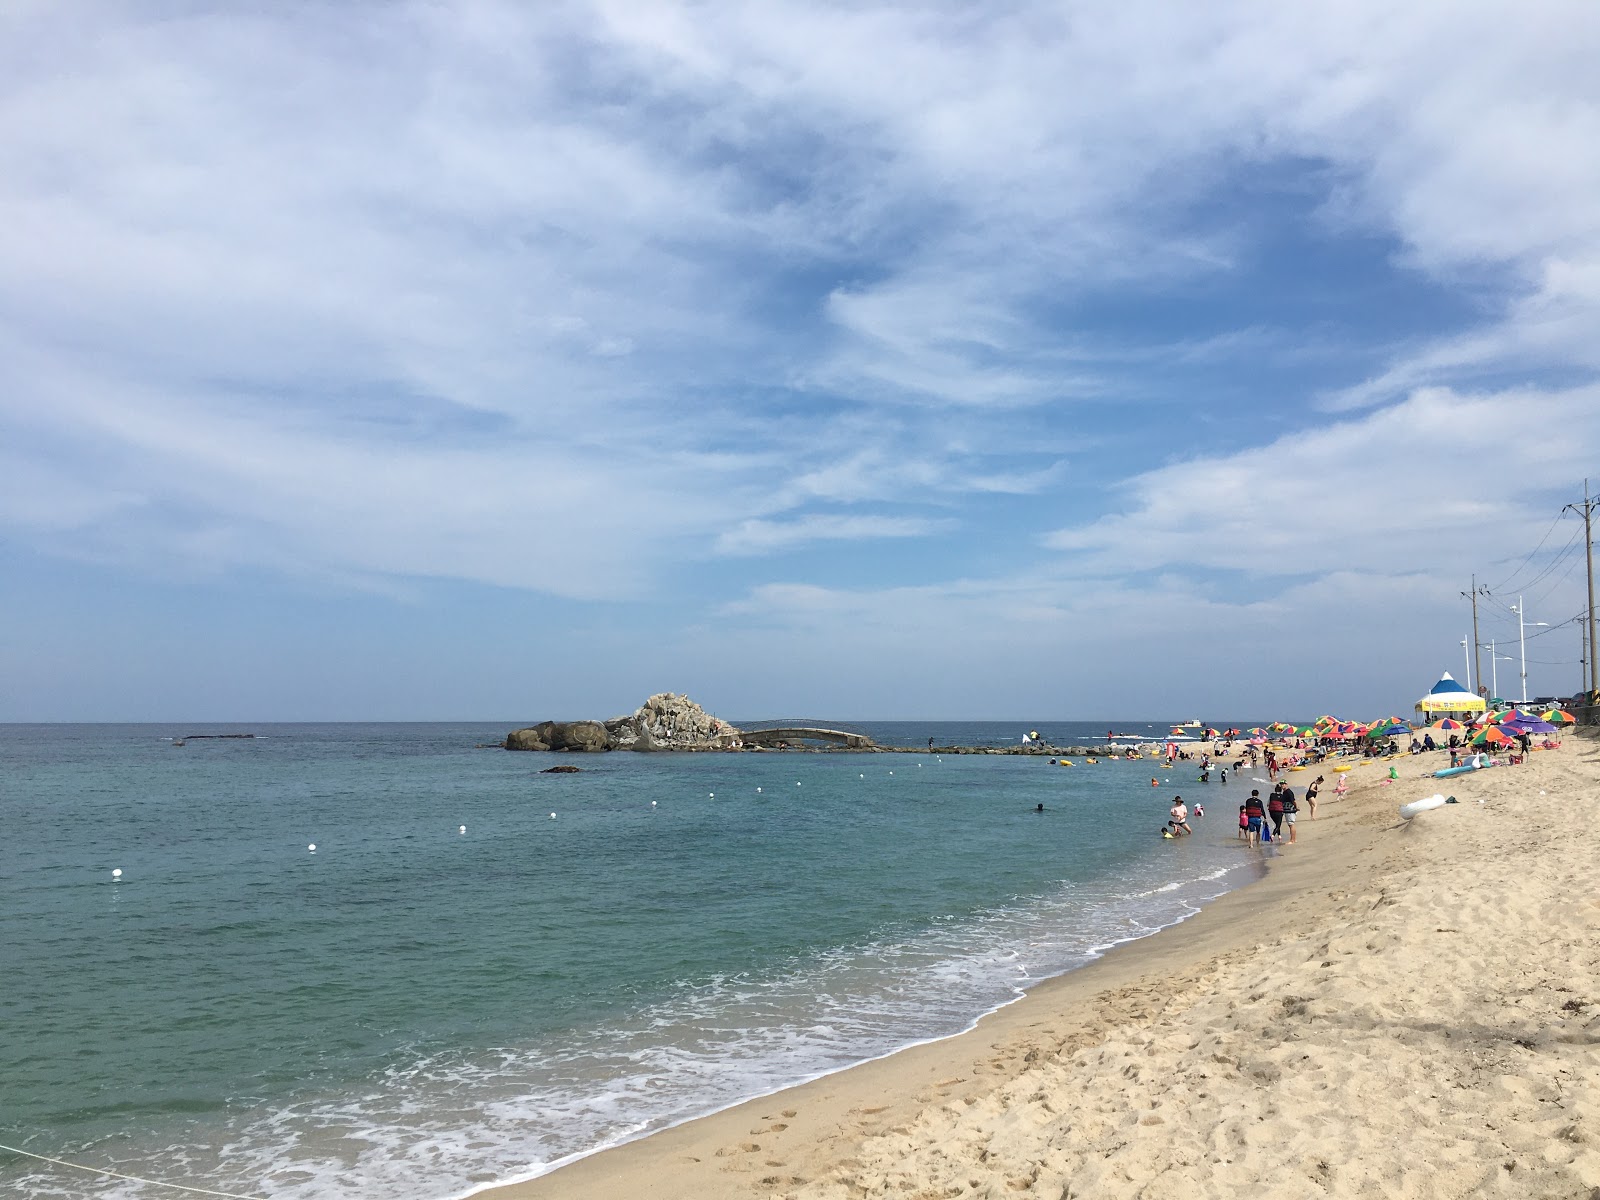 Foto de Sacheonjin Beach - lugar popular entre os apreciadores de relaxamento